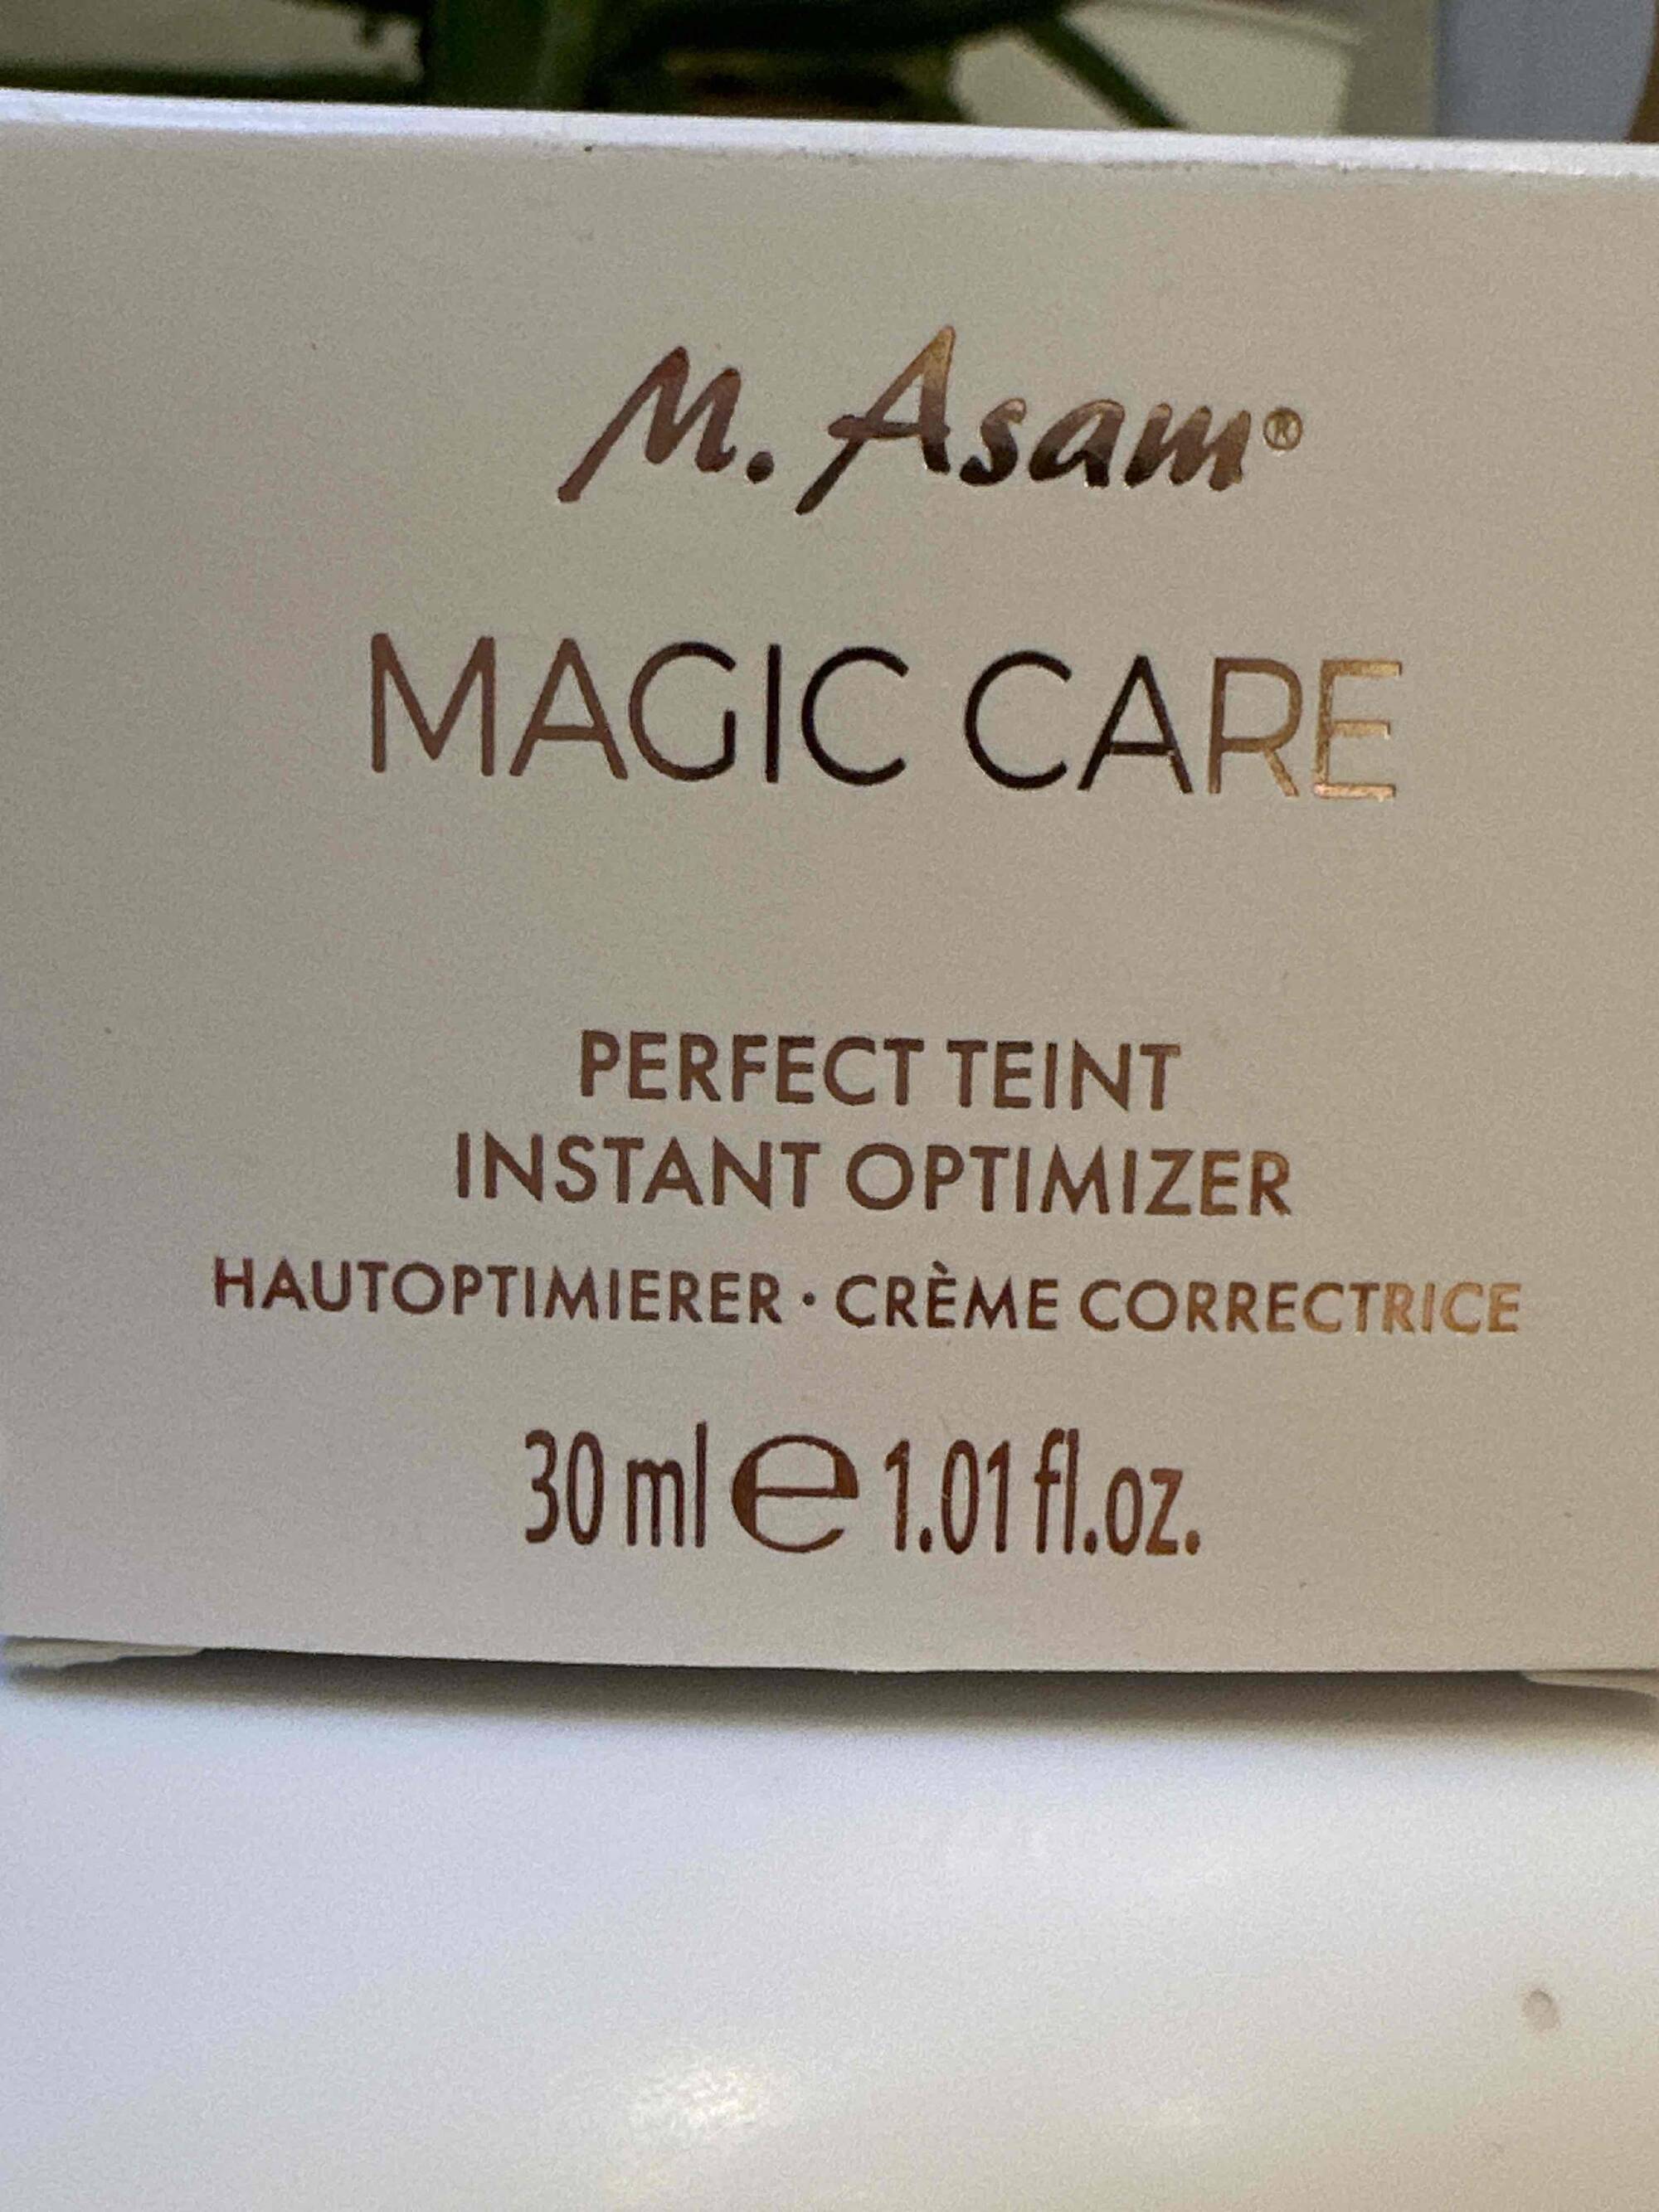 M. ASAM - Magic care perfect teint instant optimizer - Crème correctrice